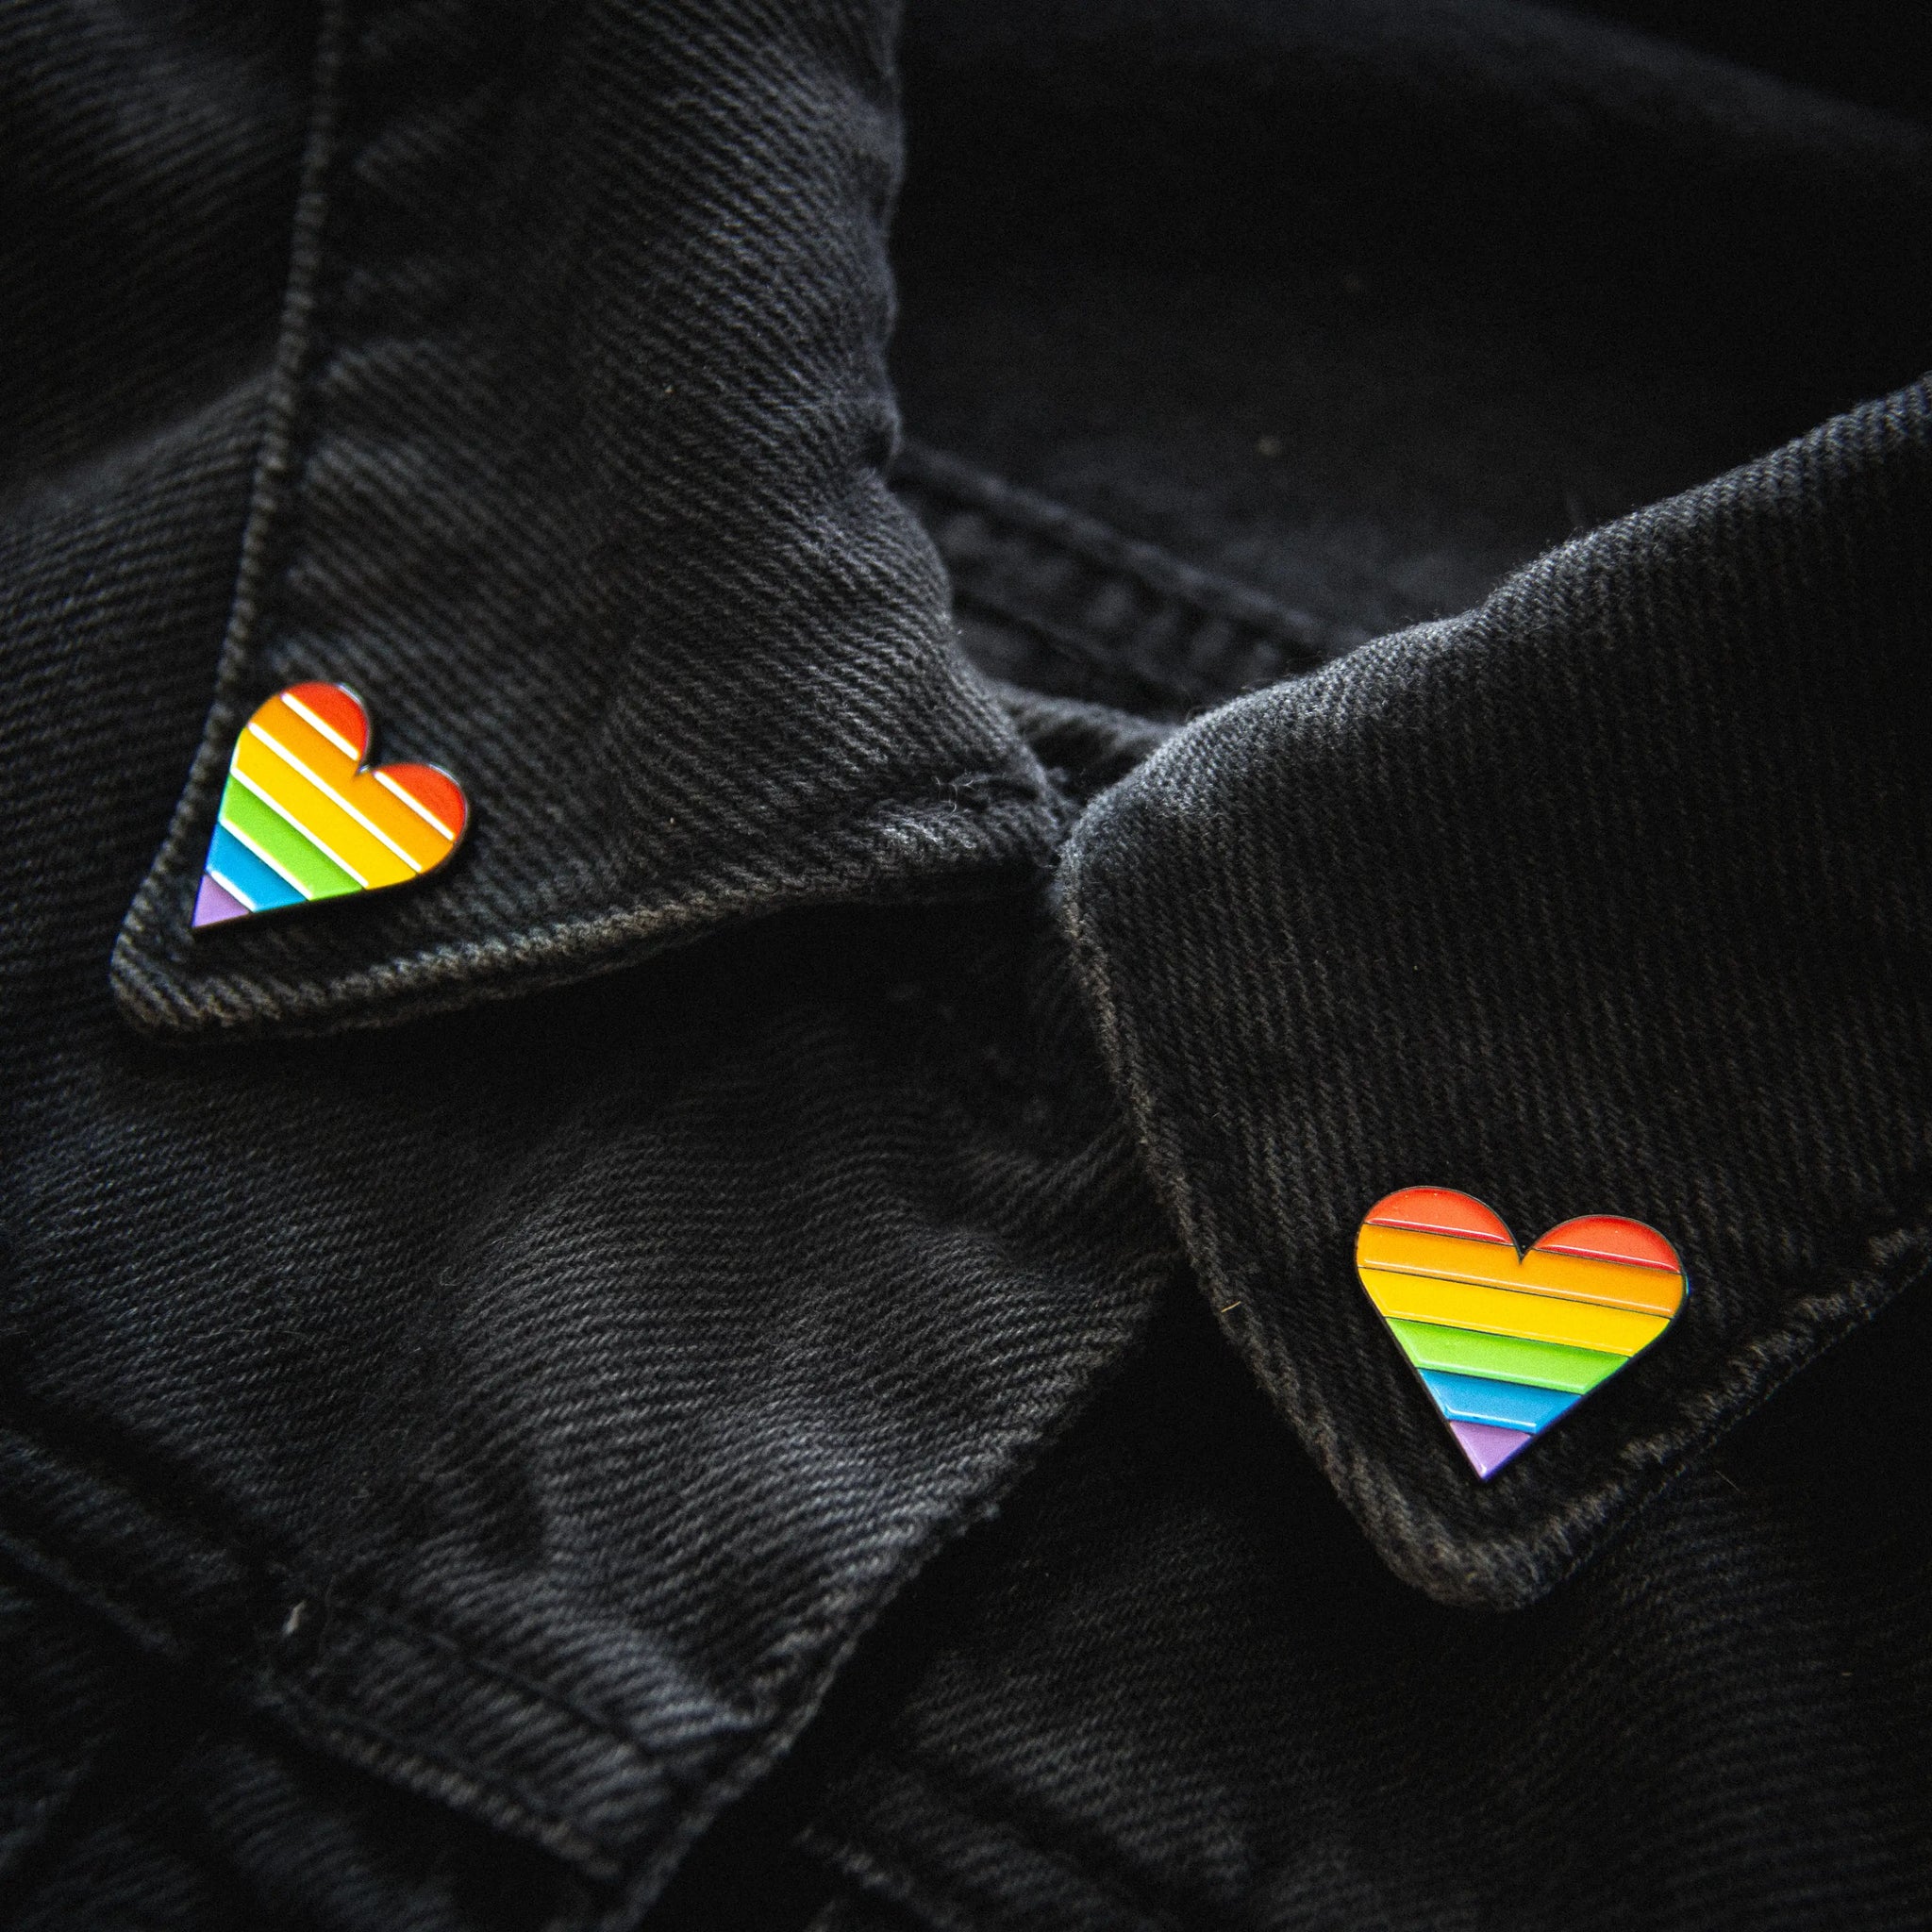 A set of rainbow heart shaped enamel pins on the collar of a black denim jacket.